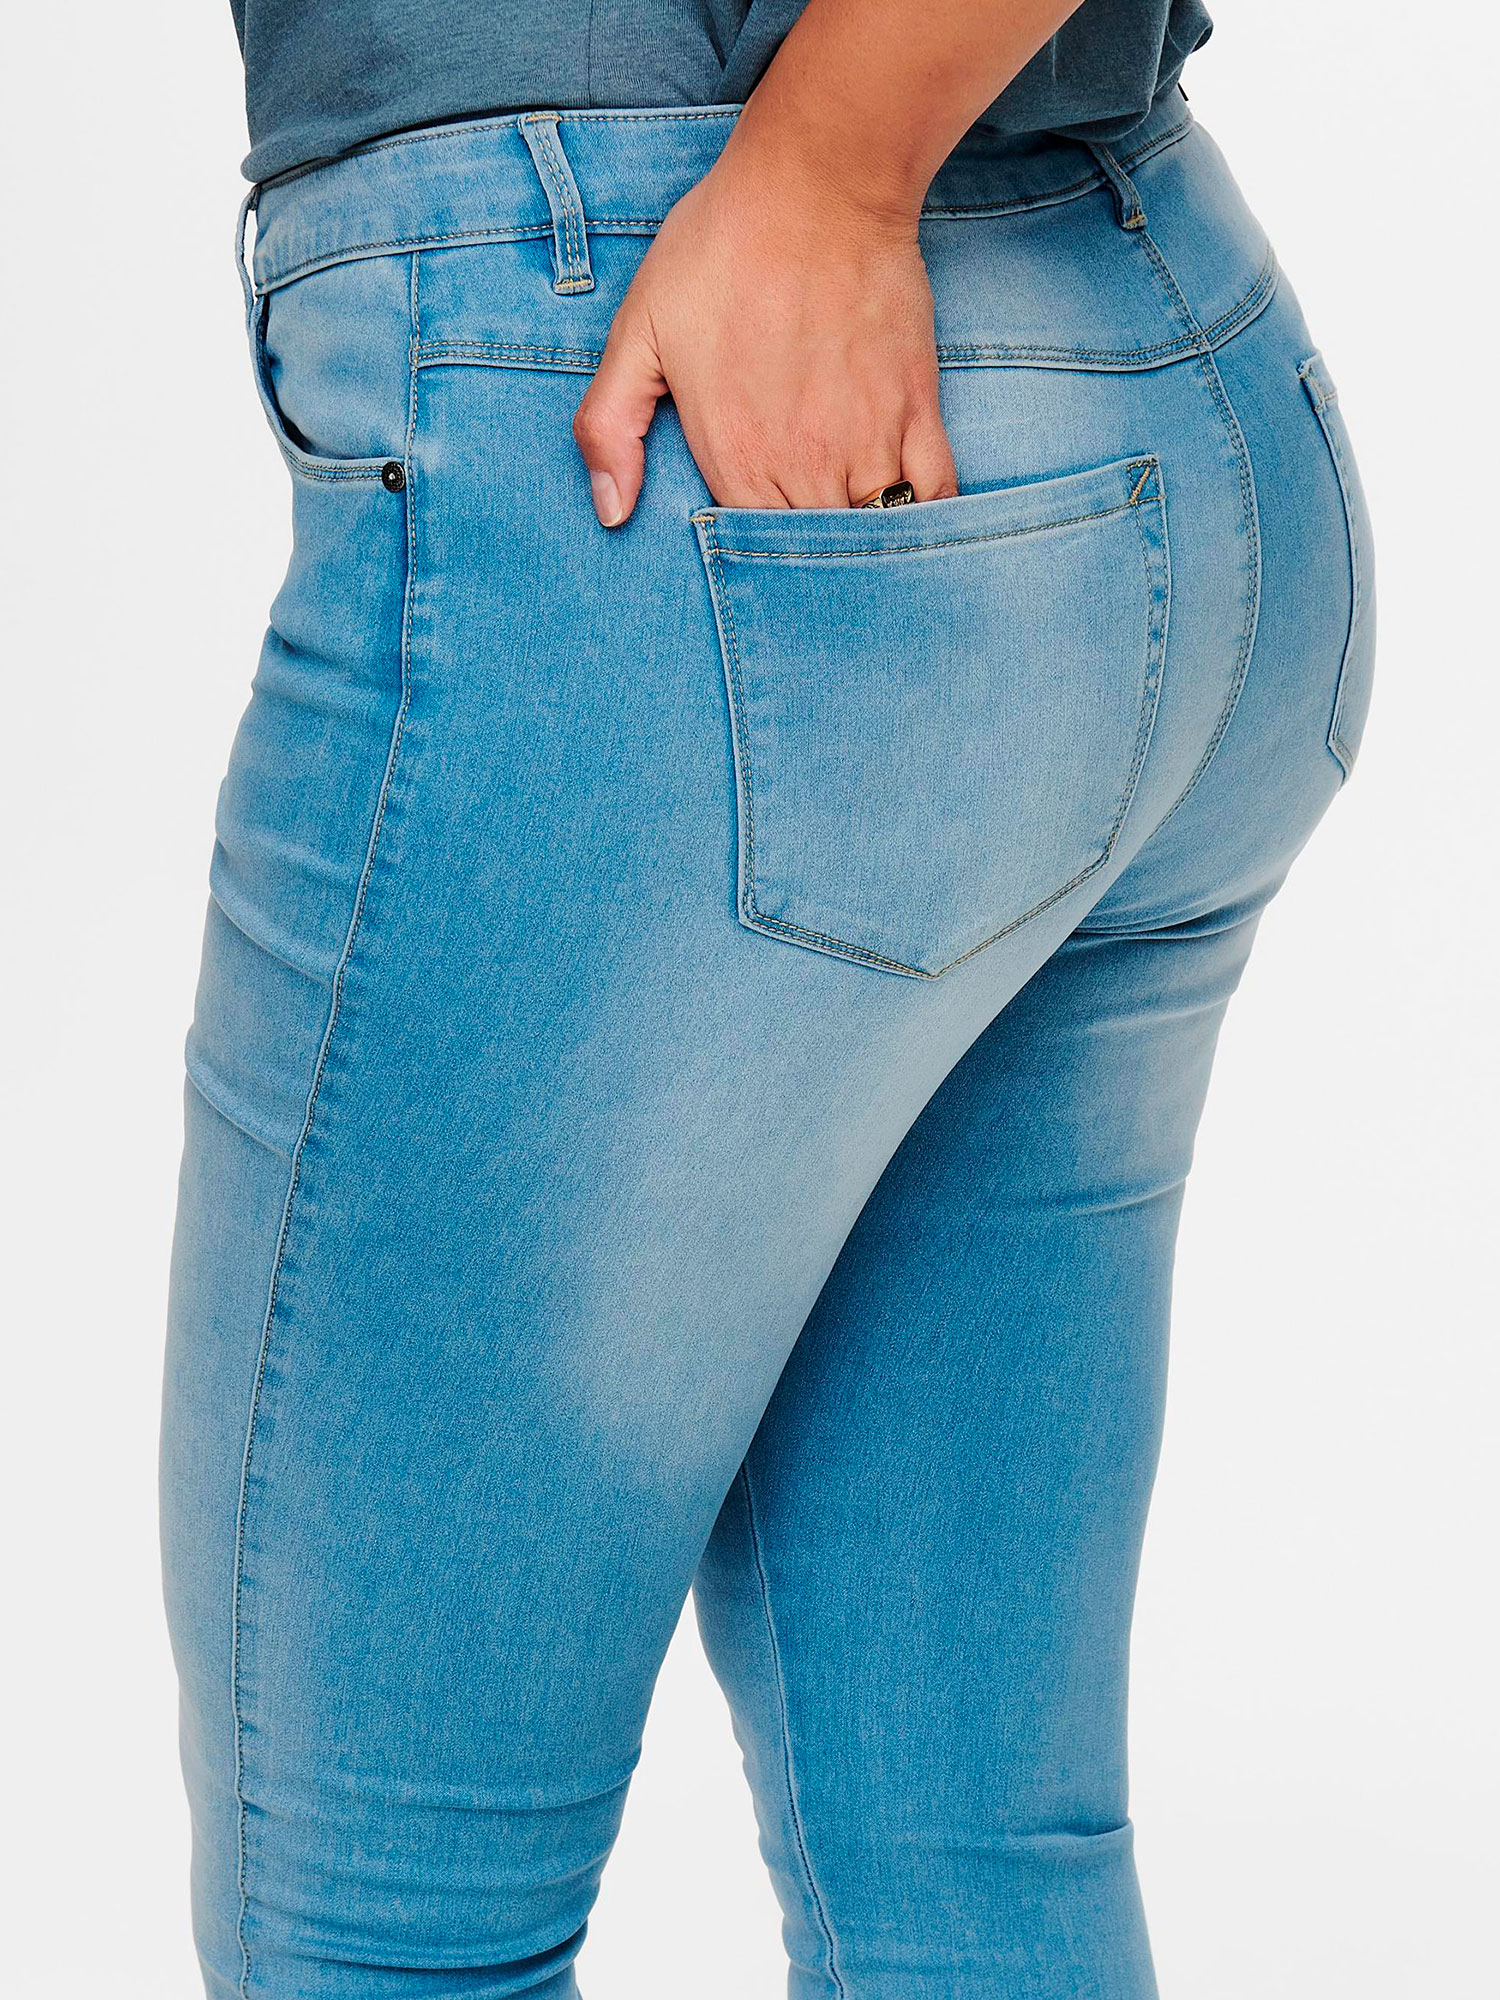 AUGUSTA - Lyseblå jeans med benlengde 34 fra Only Carmakoma